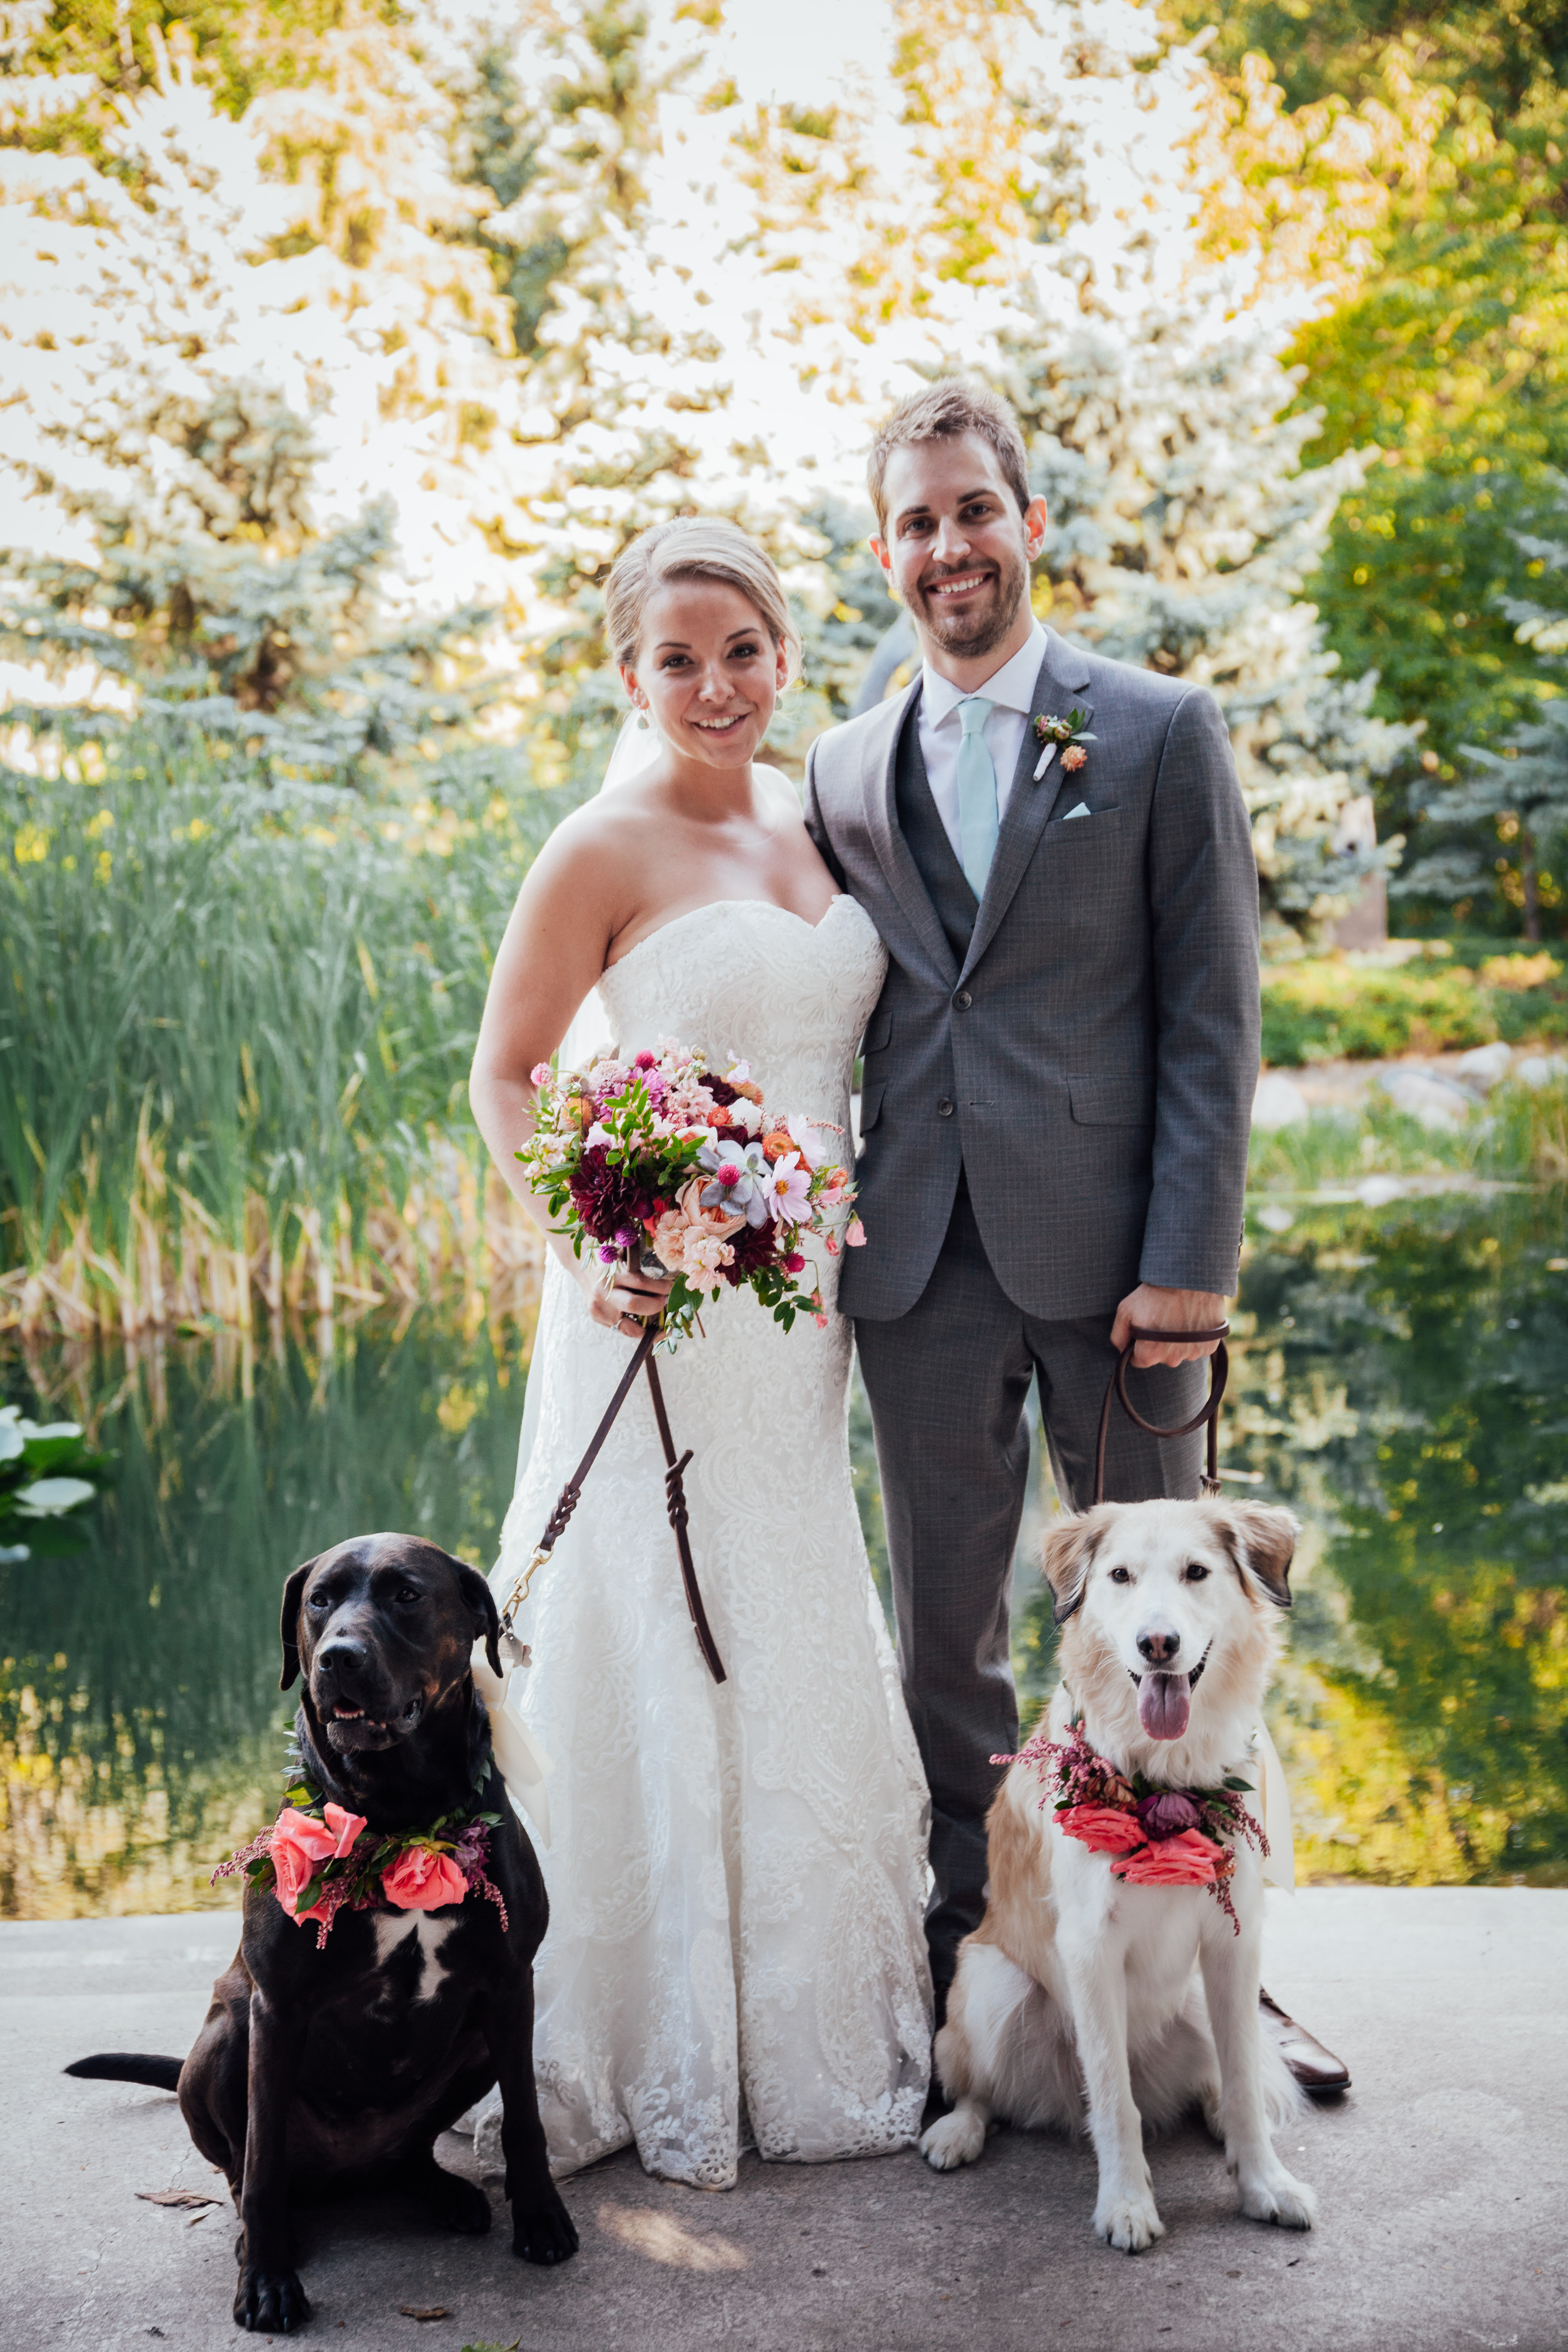 Qualico Family Centre Wedding - couple with dog